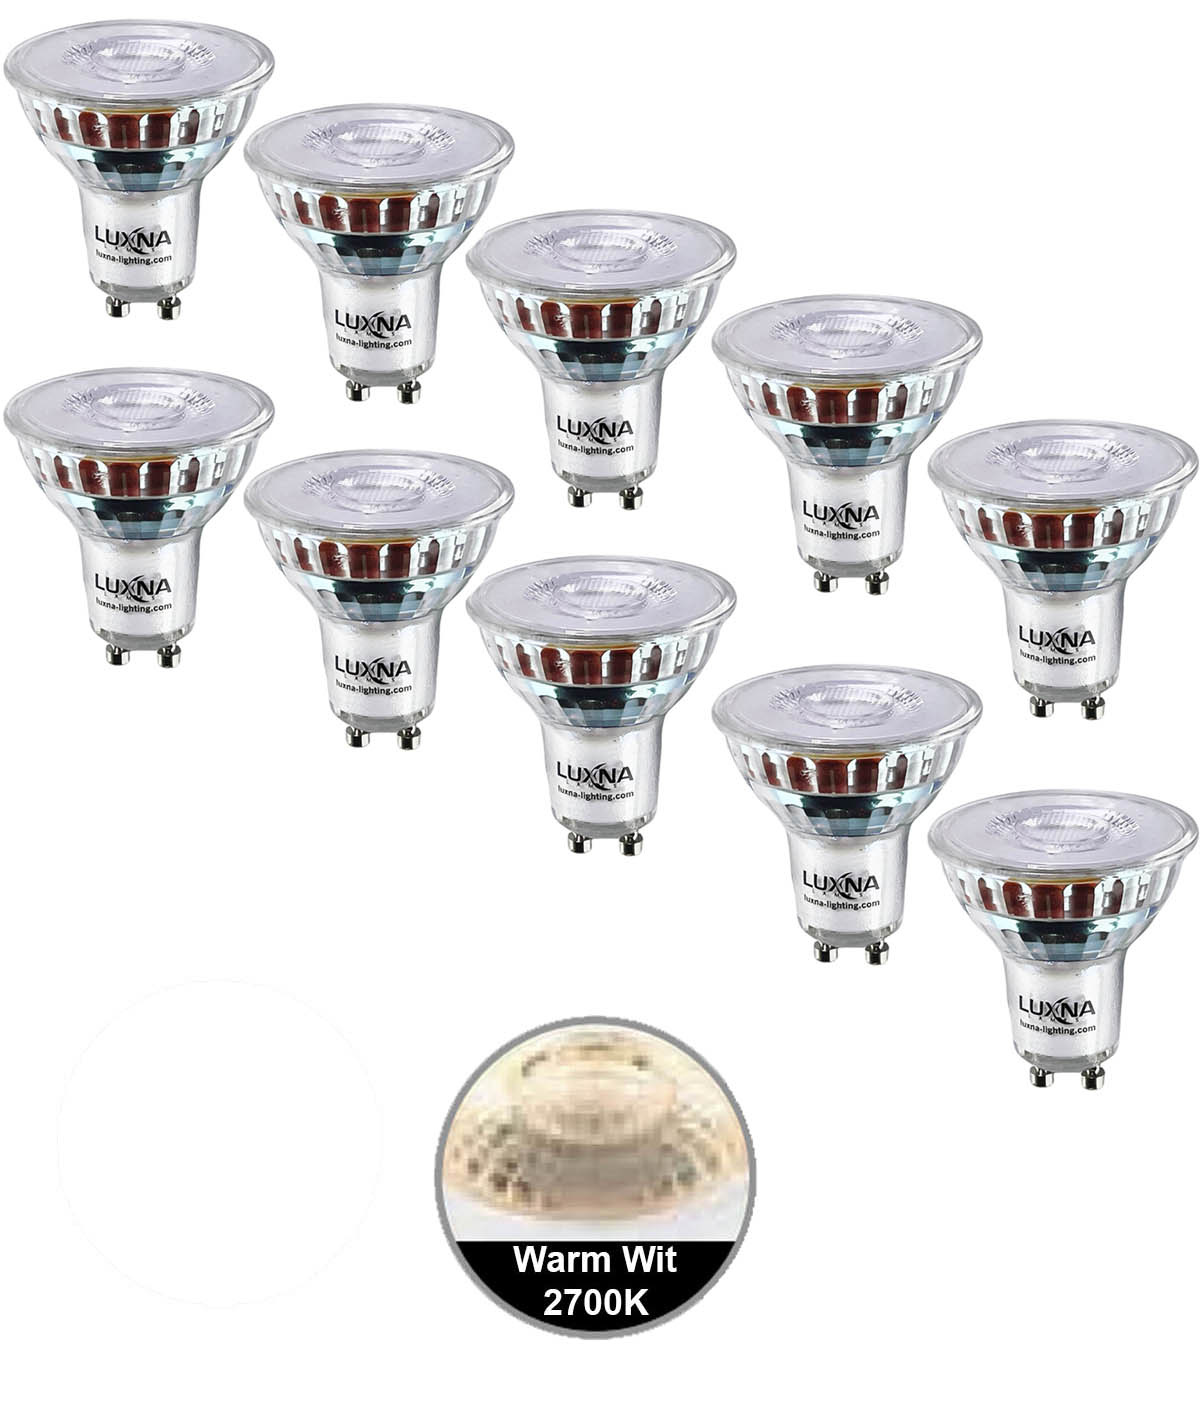 Inloggegevens plug Binnenshuis Pak van 10 stuks LED spot 5W, GU10, Dimbaar, Warm Wit, vervangt 50W -  123ledspots BV